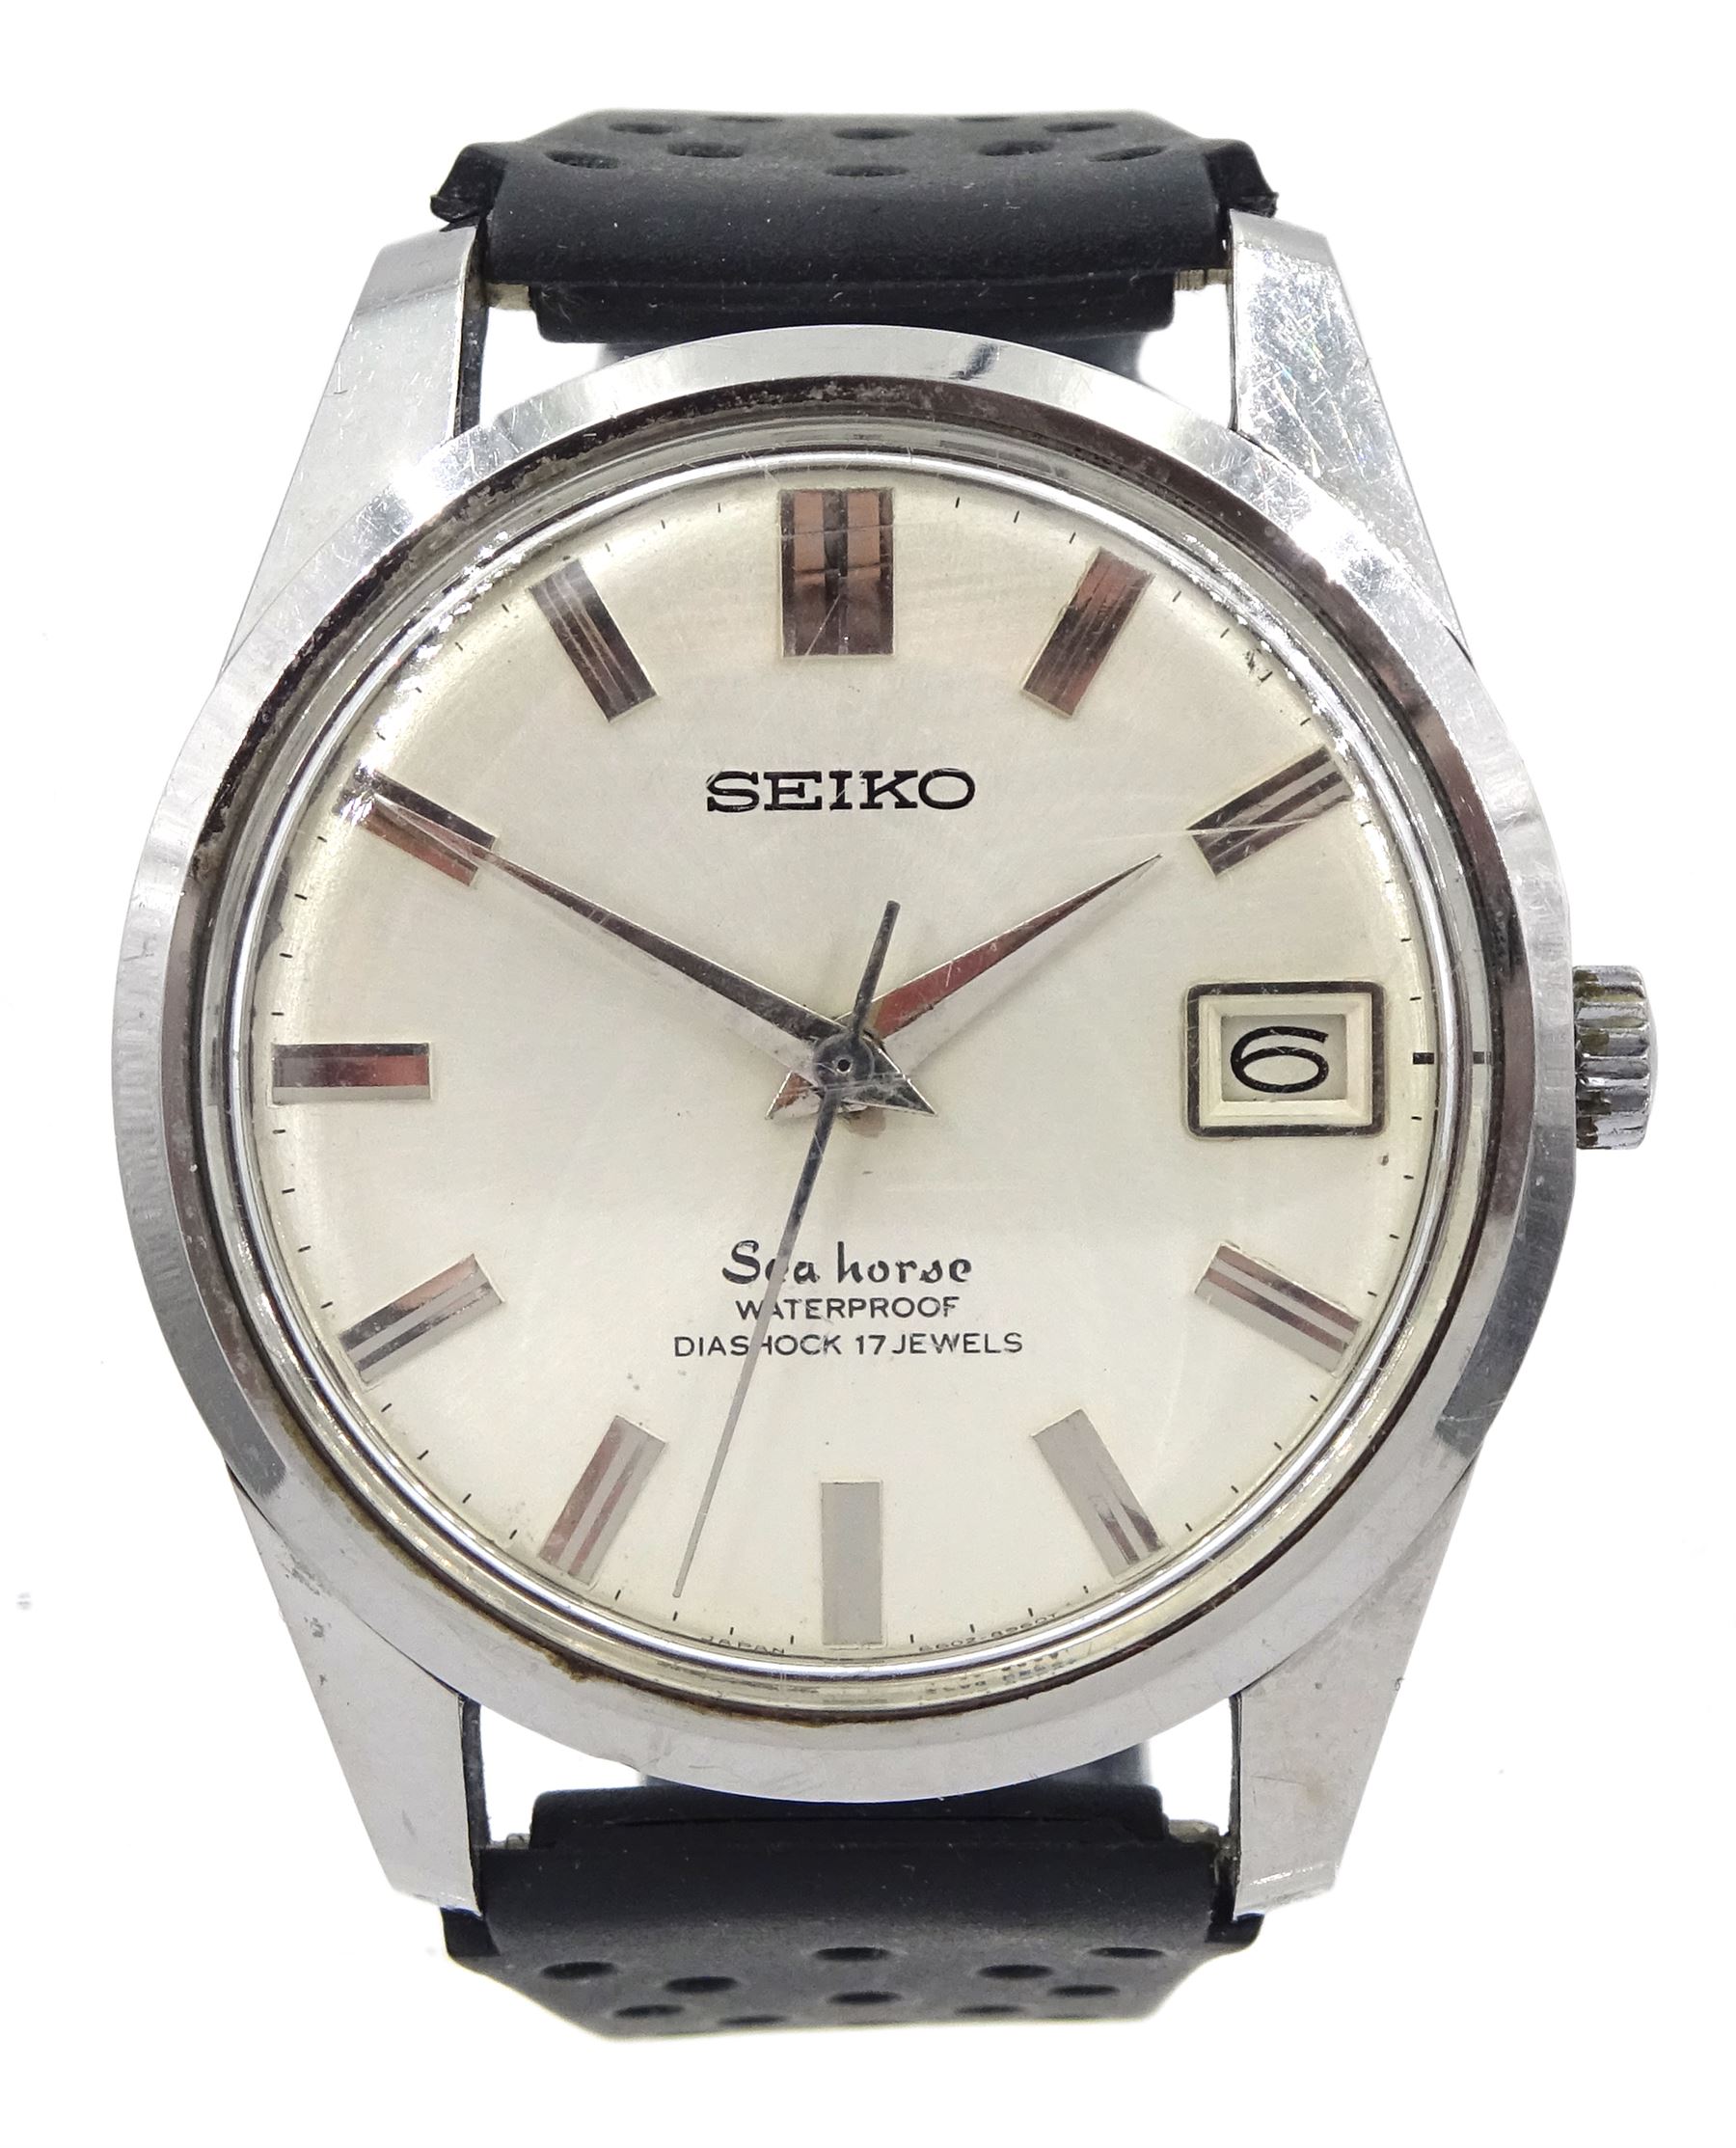 Seiko Seahorse gentleman's stainless steel 17 jewels manual wind wristwatch